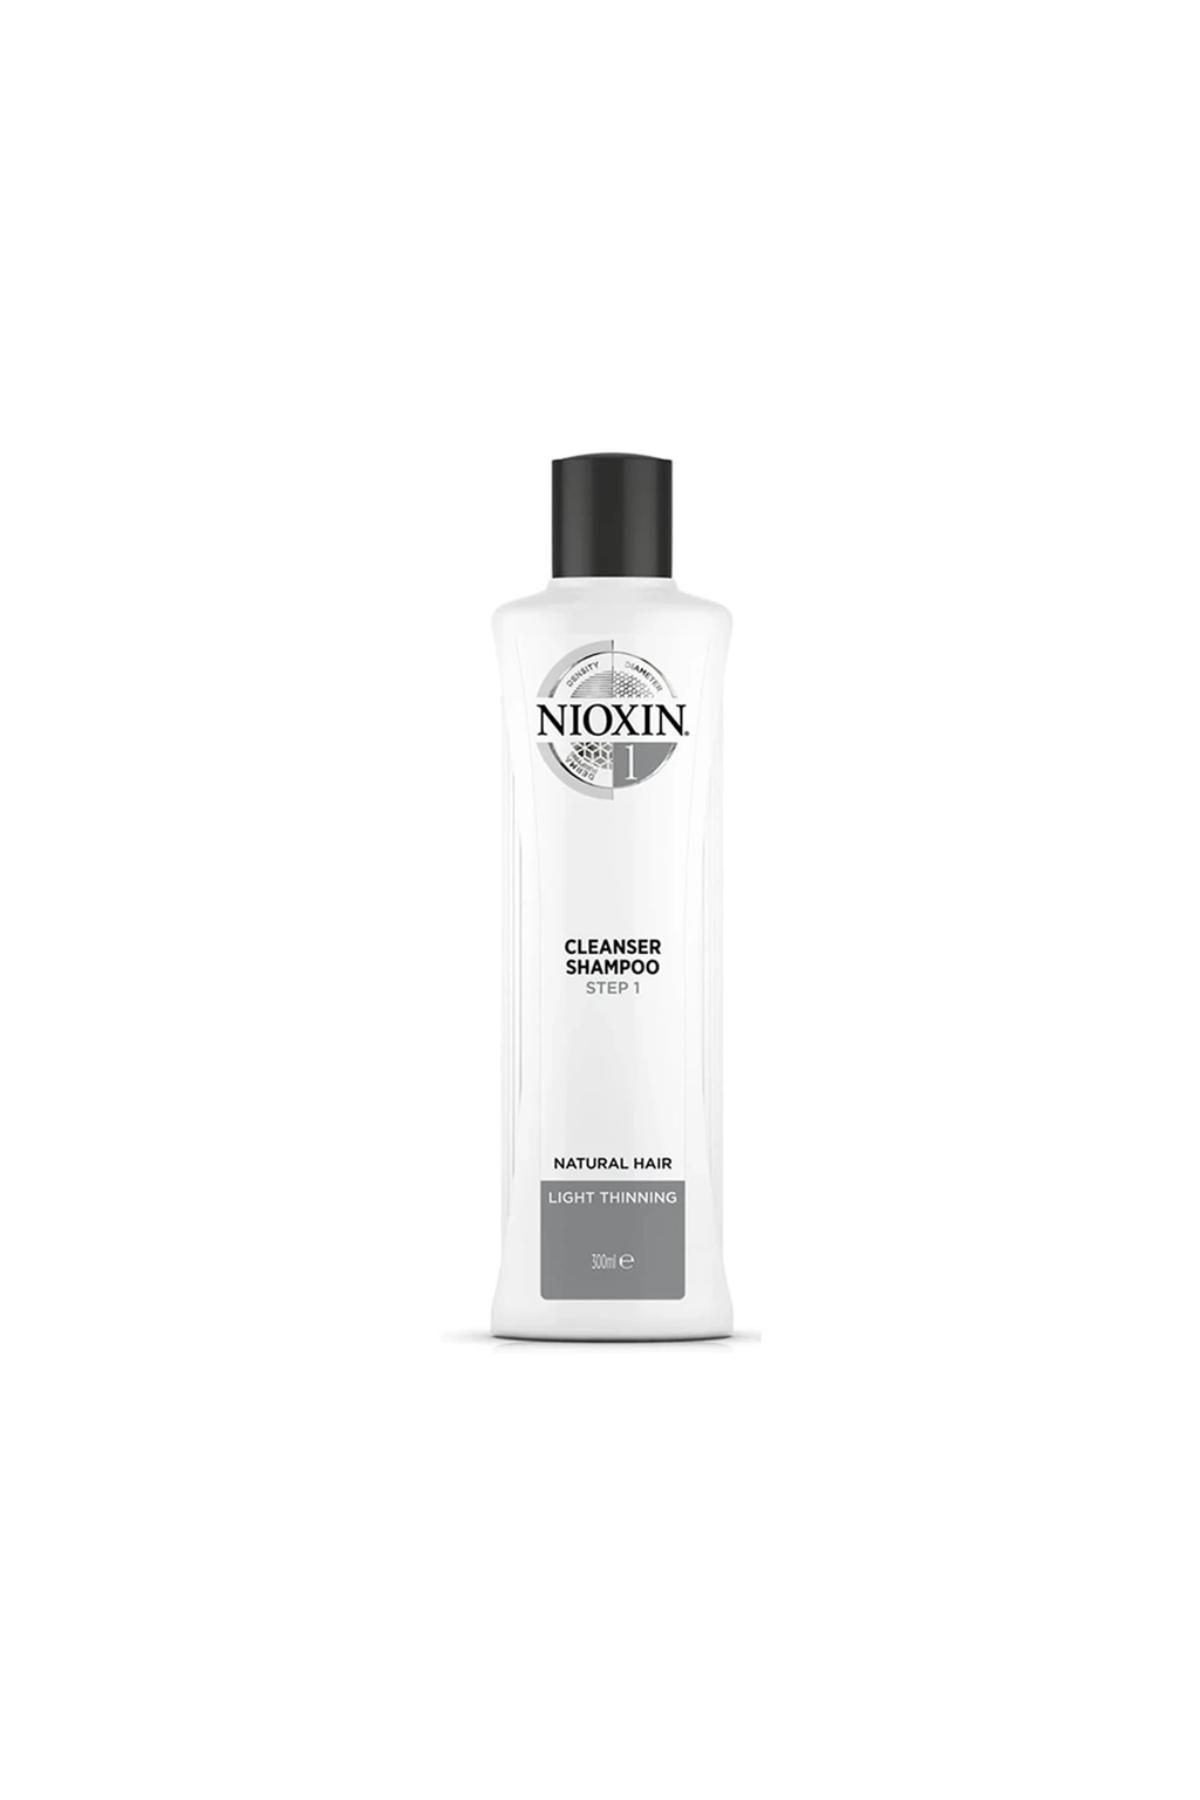 Nioxin - Cleanser Shampoo System 1